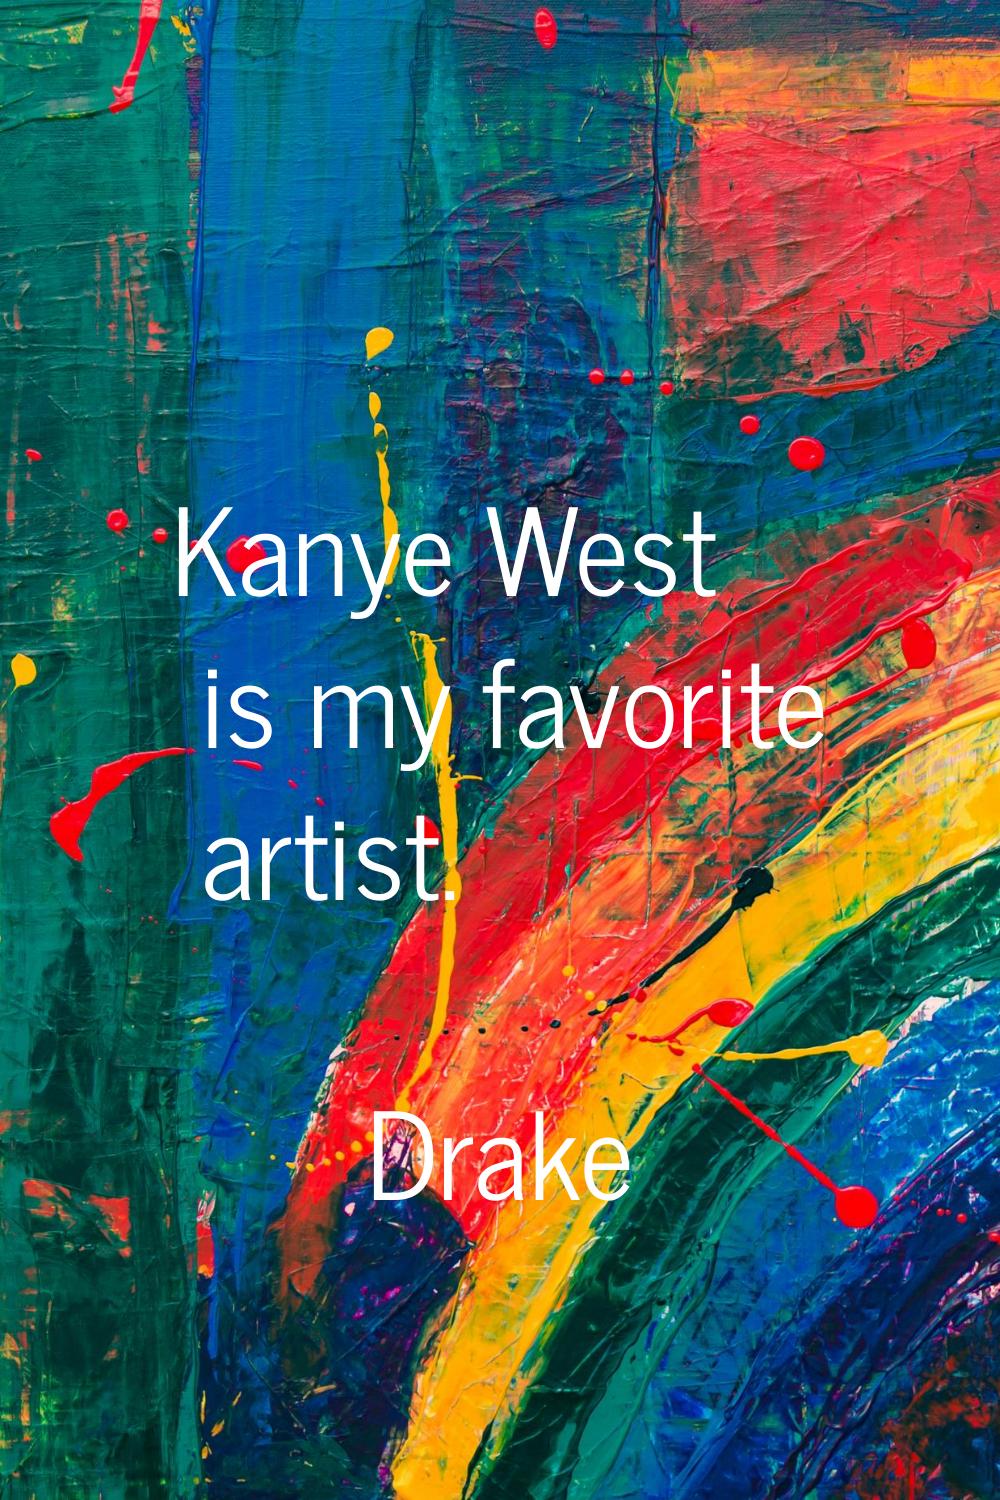 Kanye West is my favorite artist.